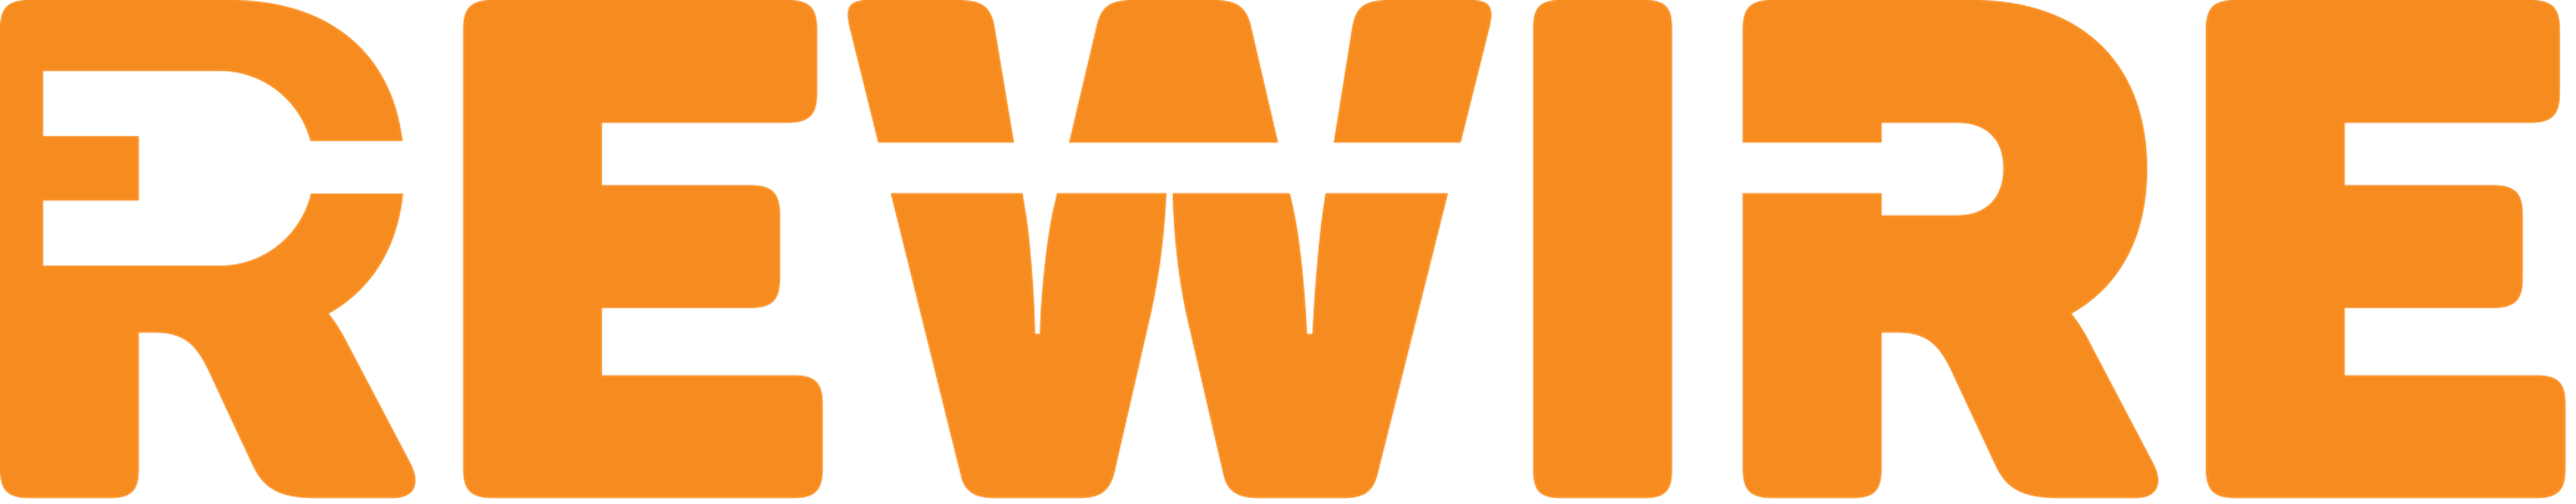 ReWire logo.